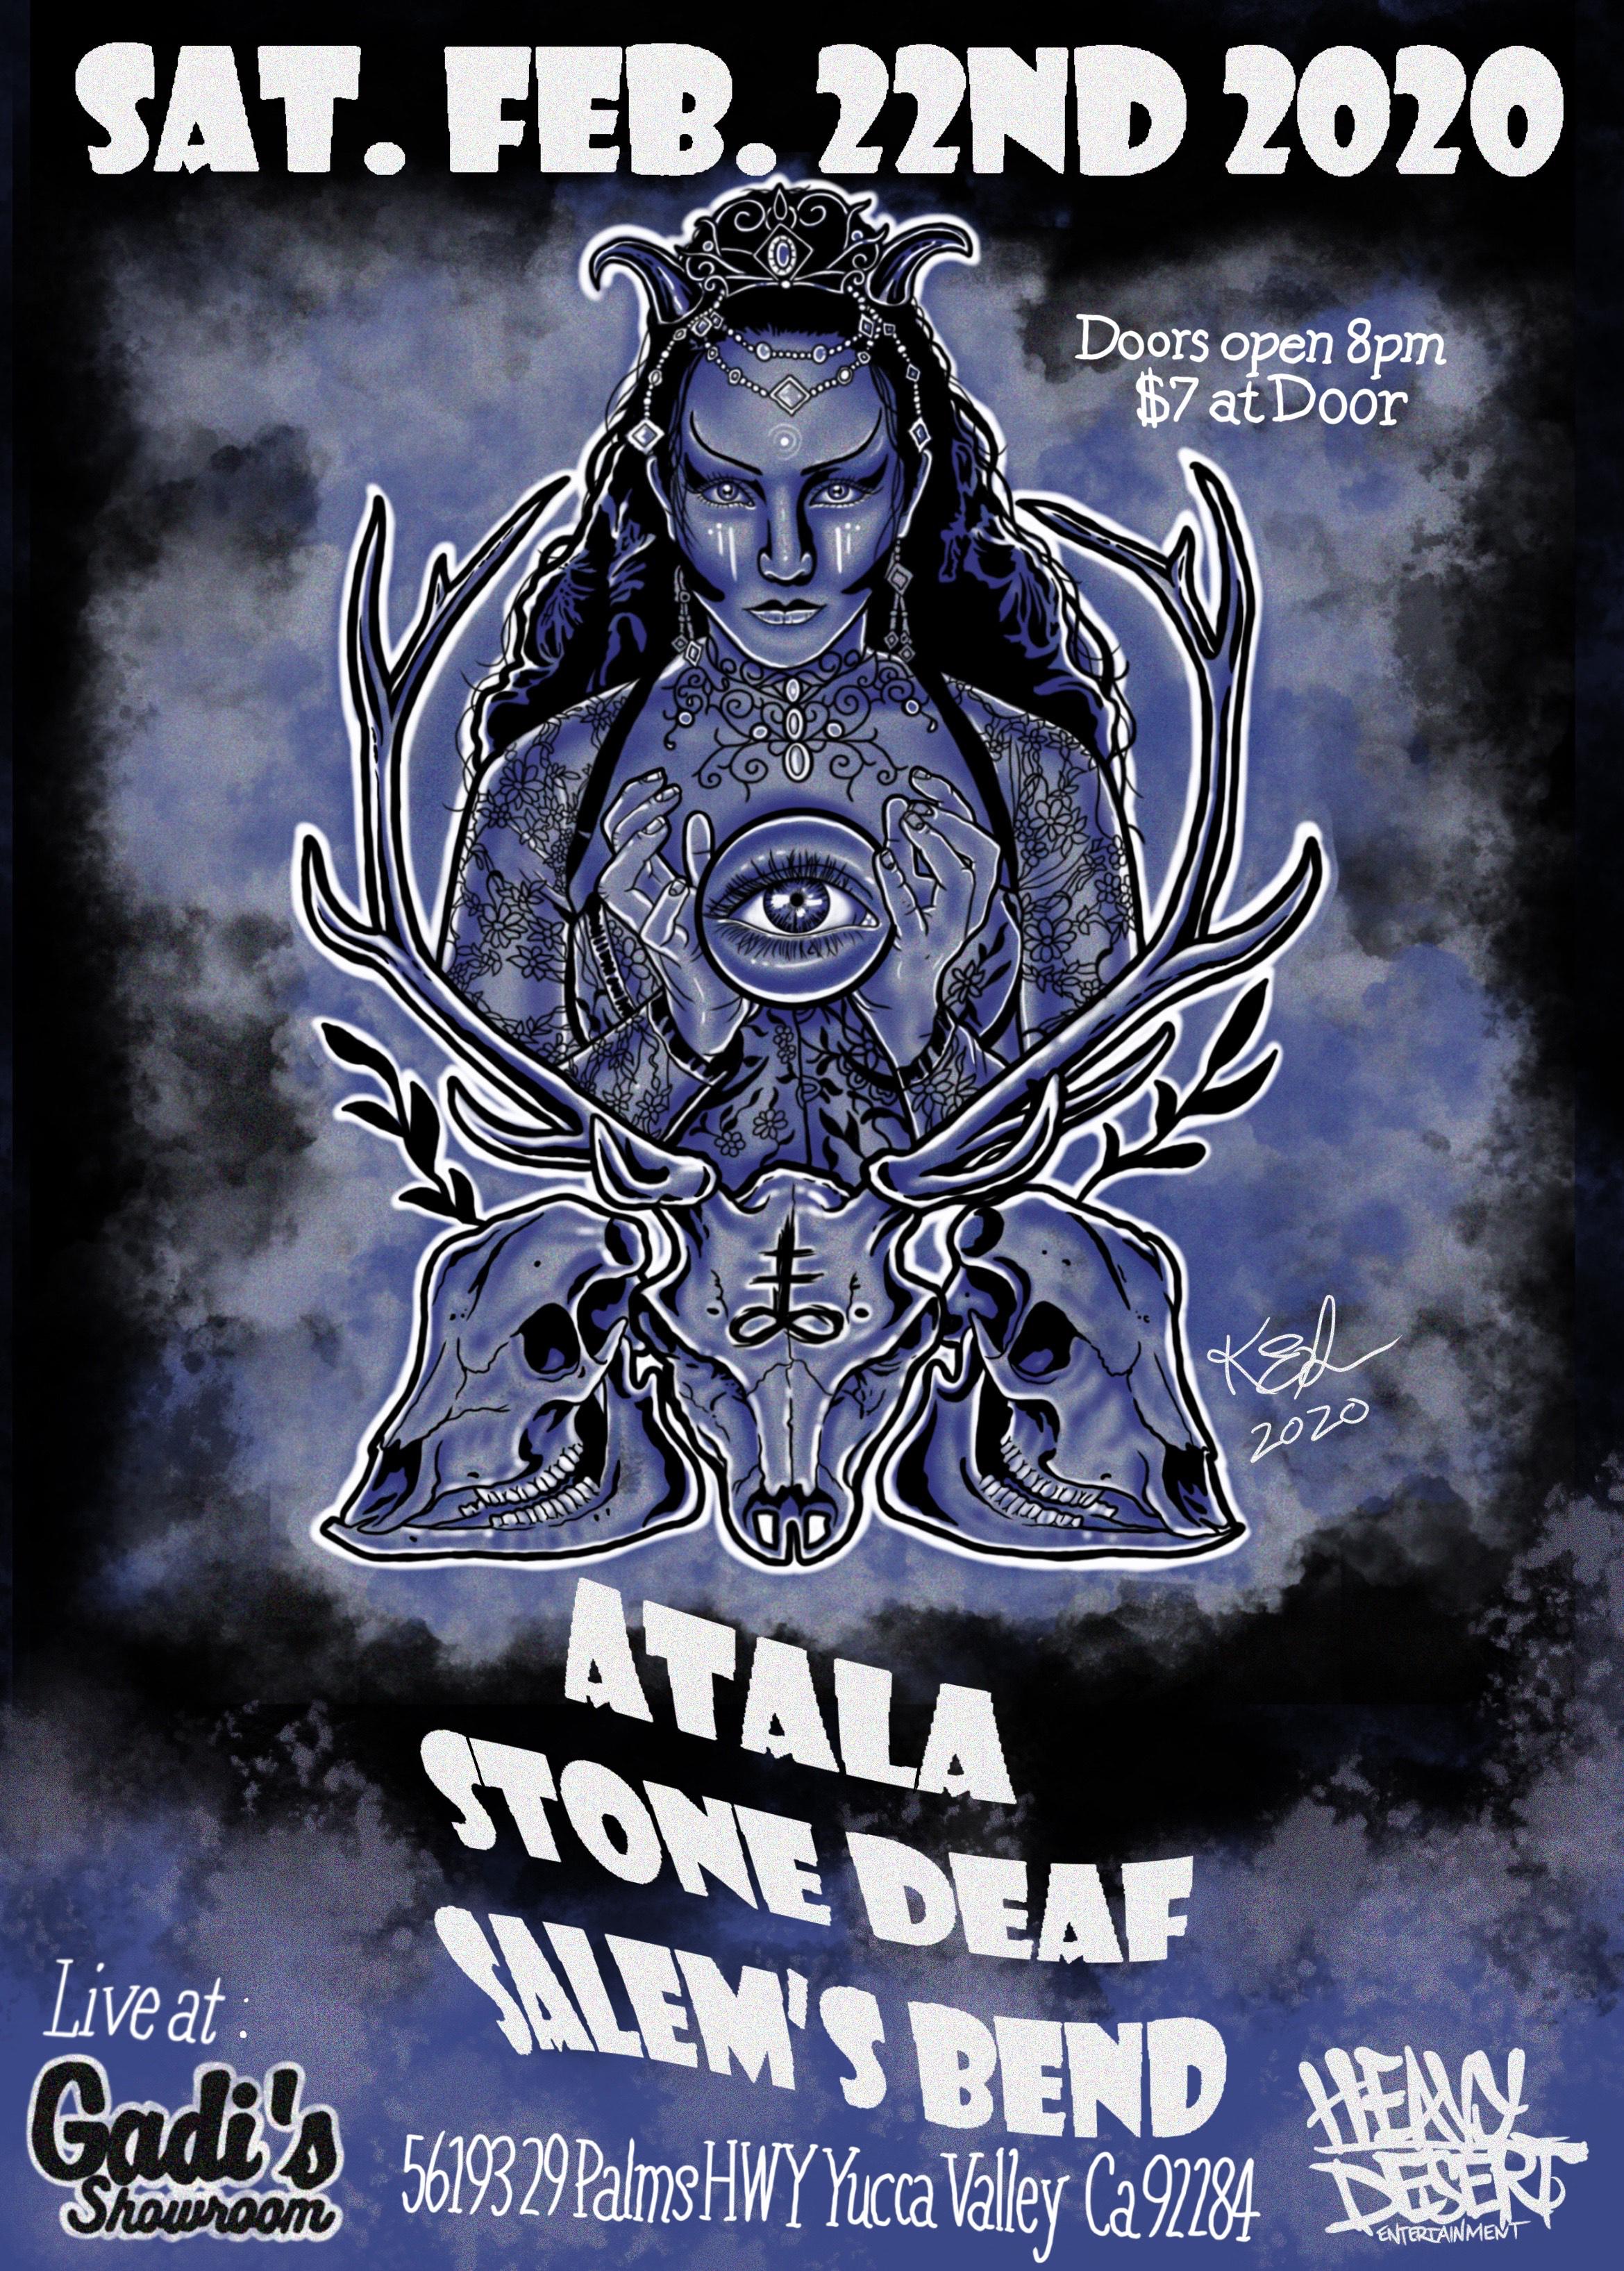 Stone Deaf, Salem's Bend and Atala at Gadi's